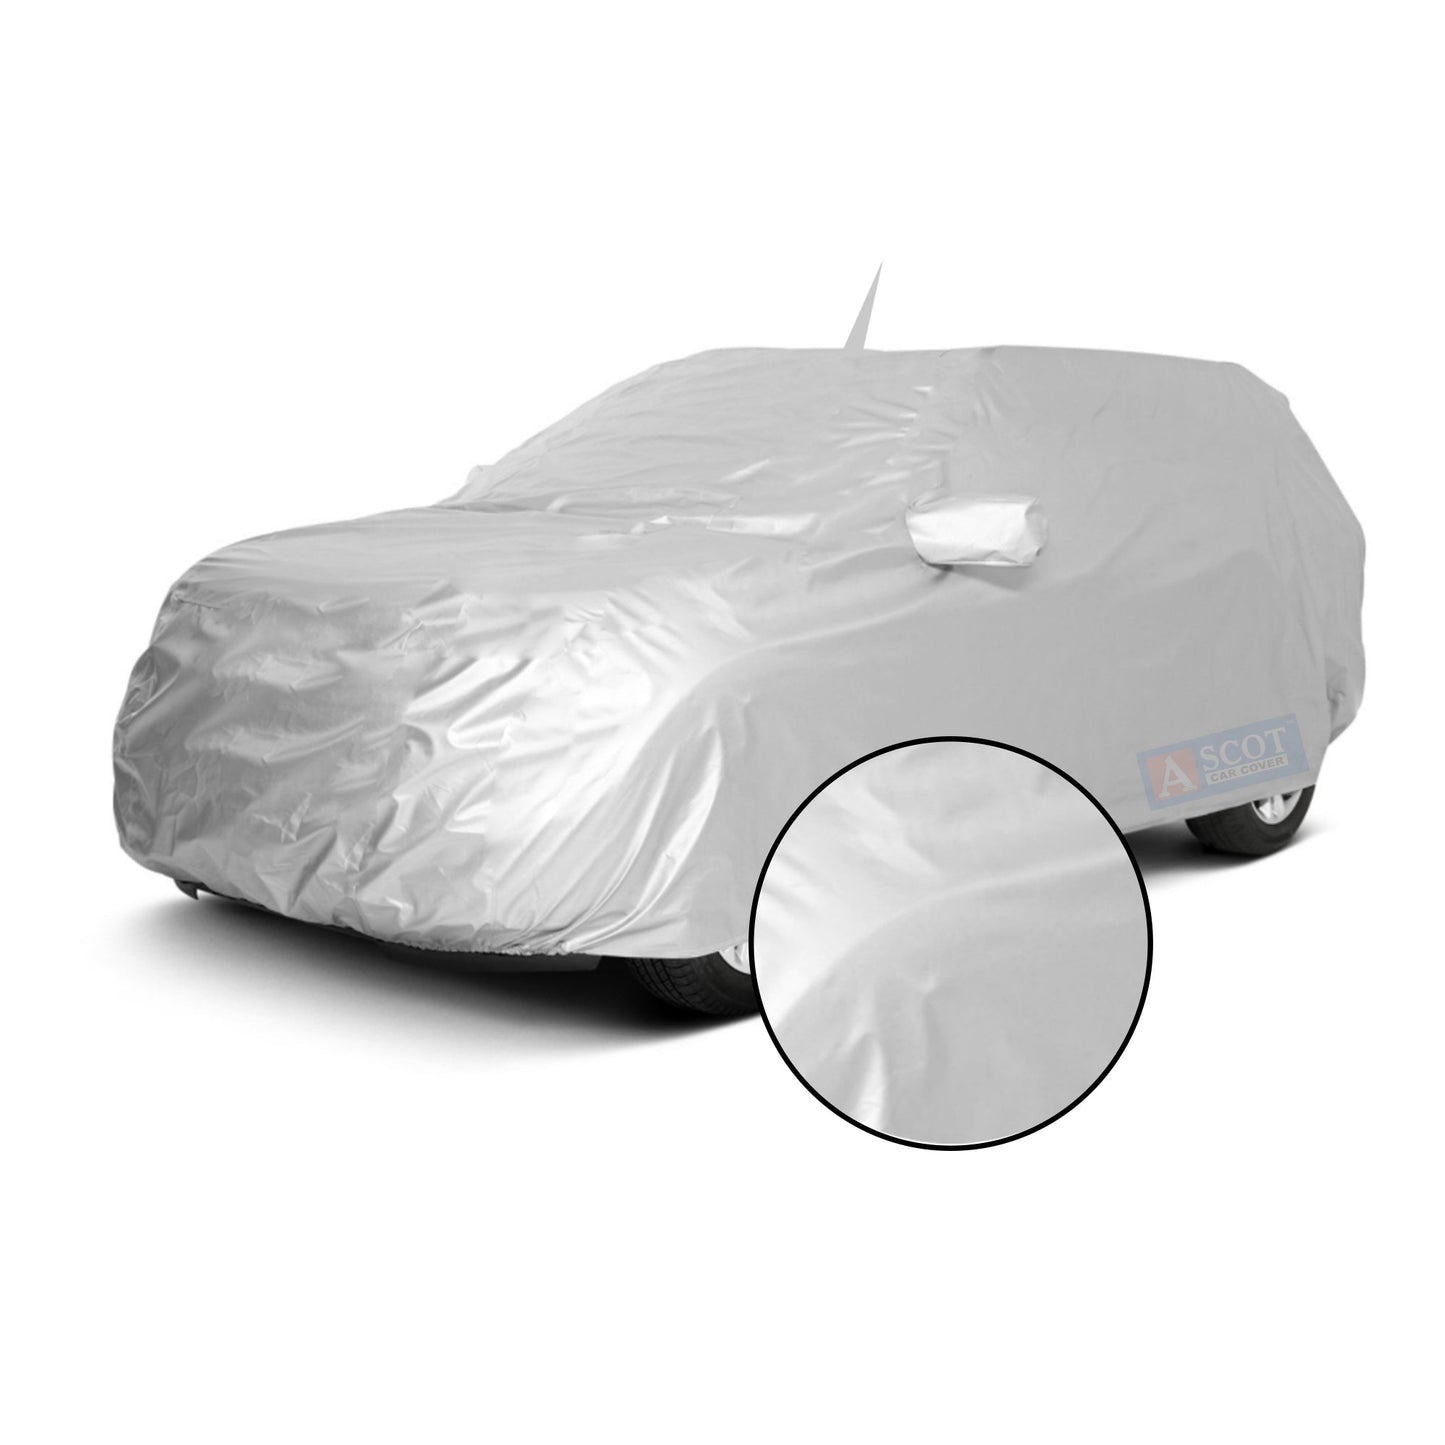 Ascot Maruti Suzuki Celerio Car Body Cover 2021-2024 Model Dust Proof, Trippel Stitched